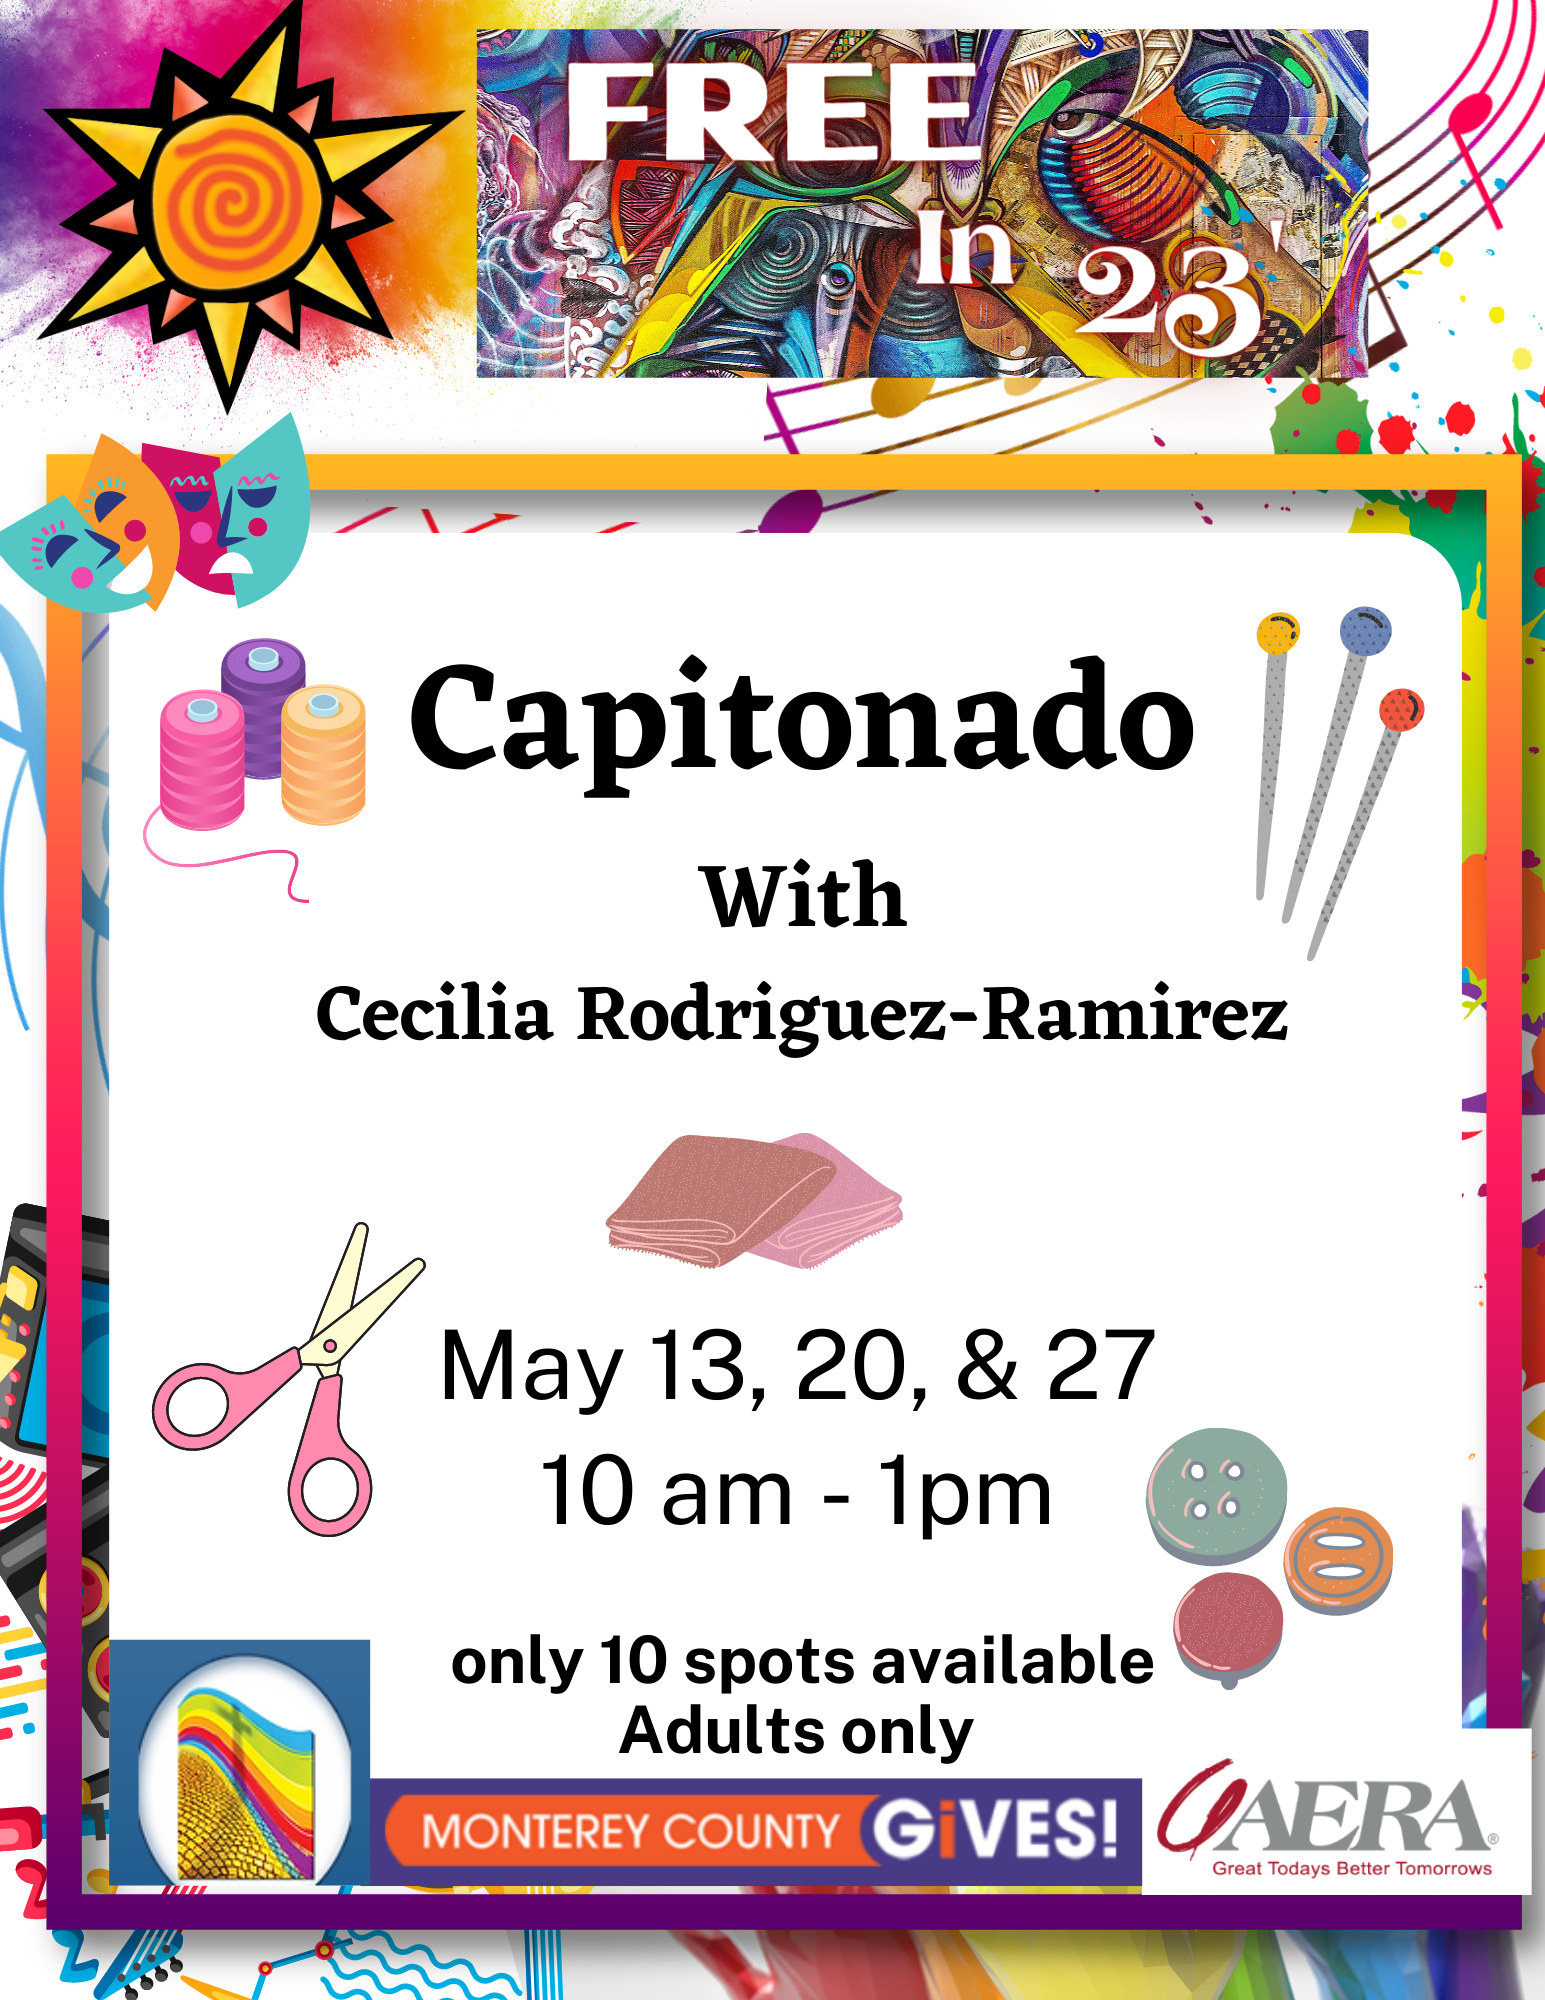 Flyer- Capitonado with Cecilia Rodriguez-Ramirez. May 13, 20, & 27 from 10 am - 1 pm